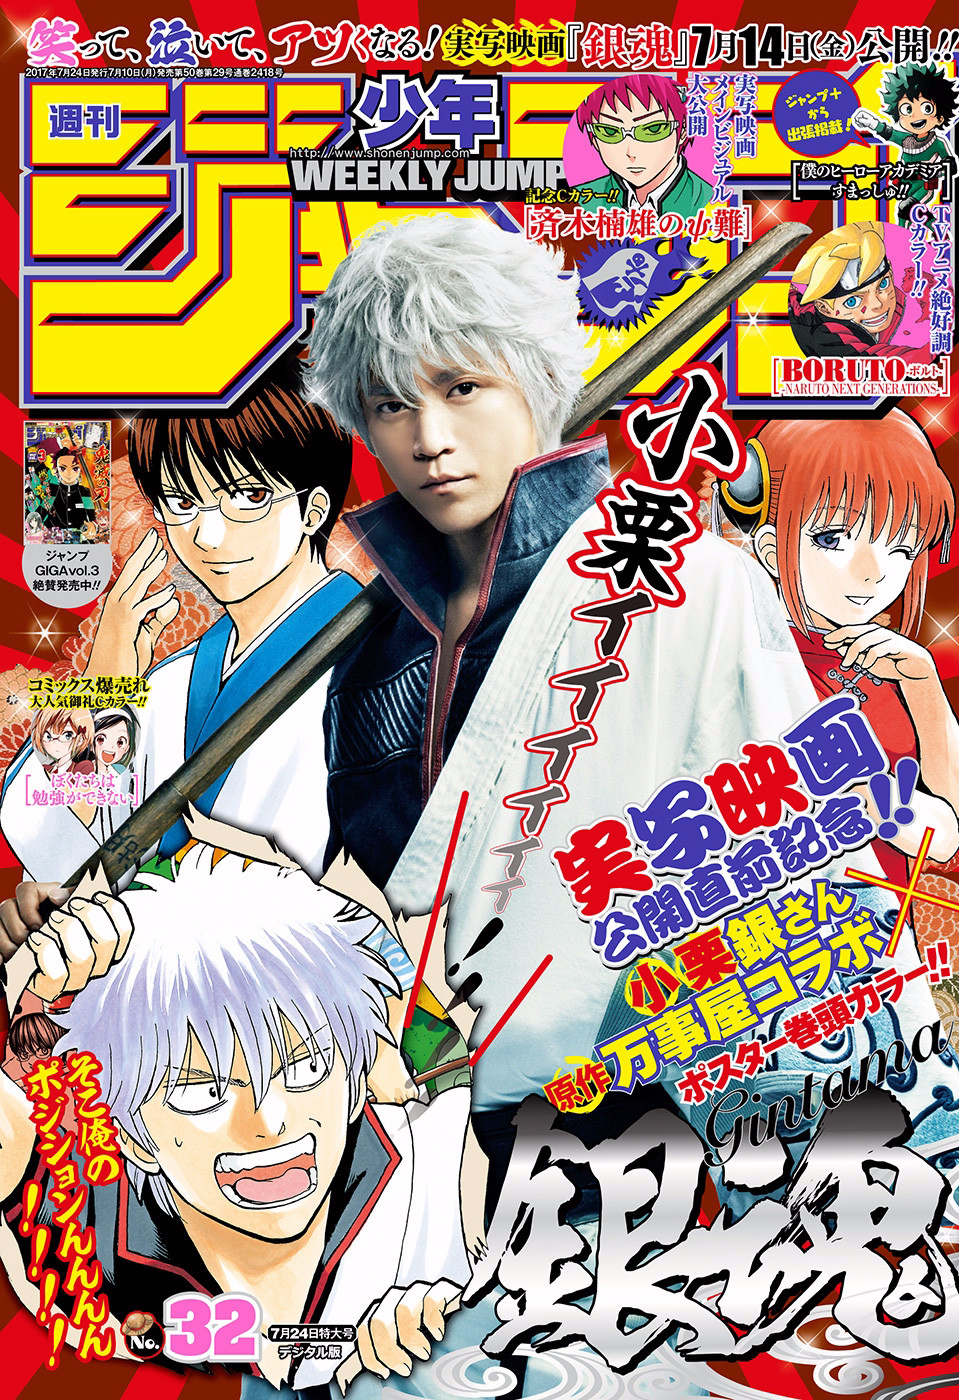 Weekly Shonen Jump Issue 32 17 Jump Database Fandom